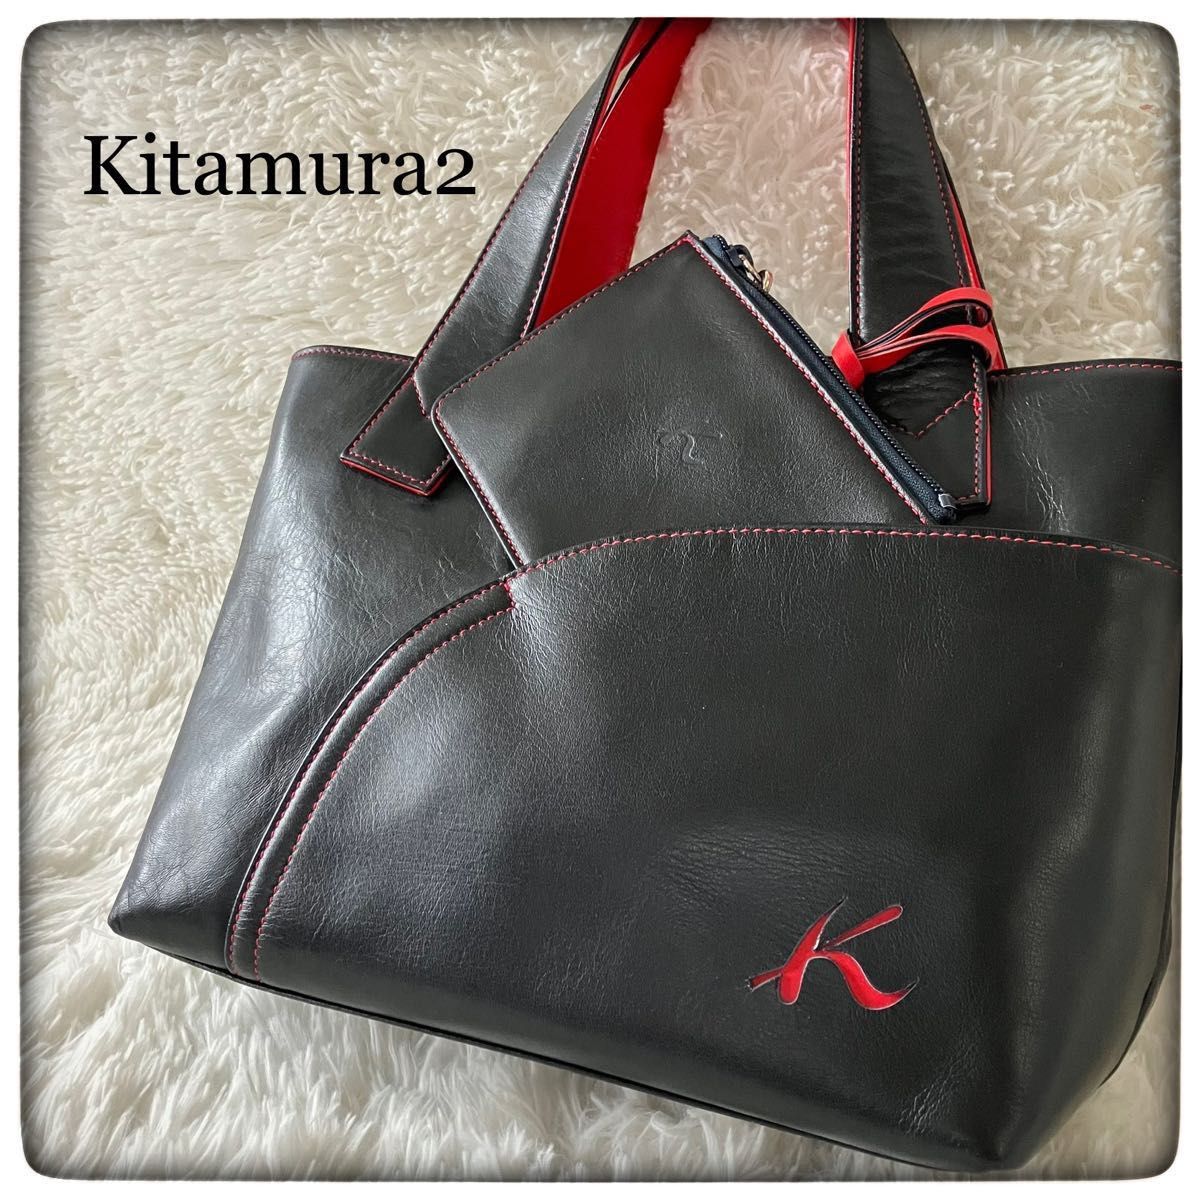 Kitamura2 キタムラ2 パイソン 巾着 バケツ型バッグ